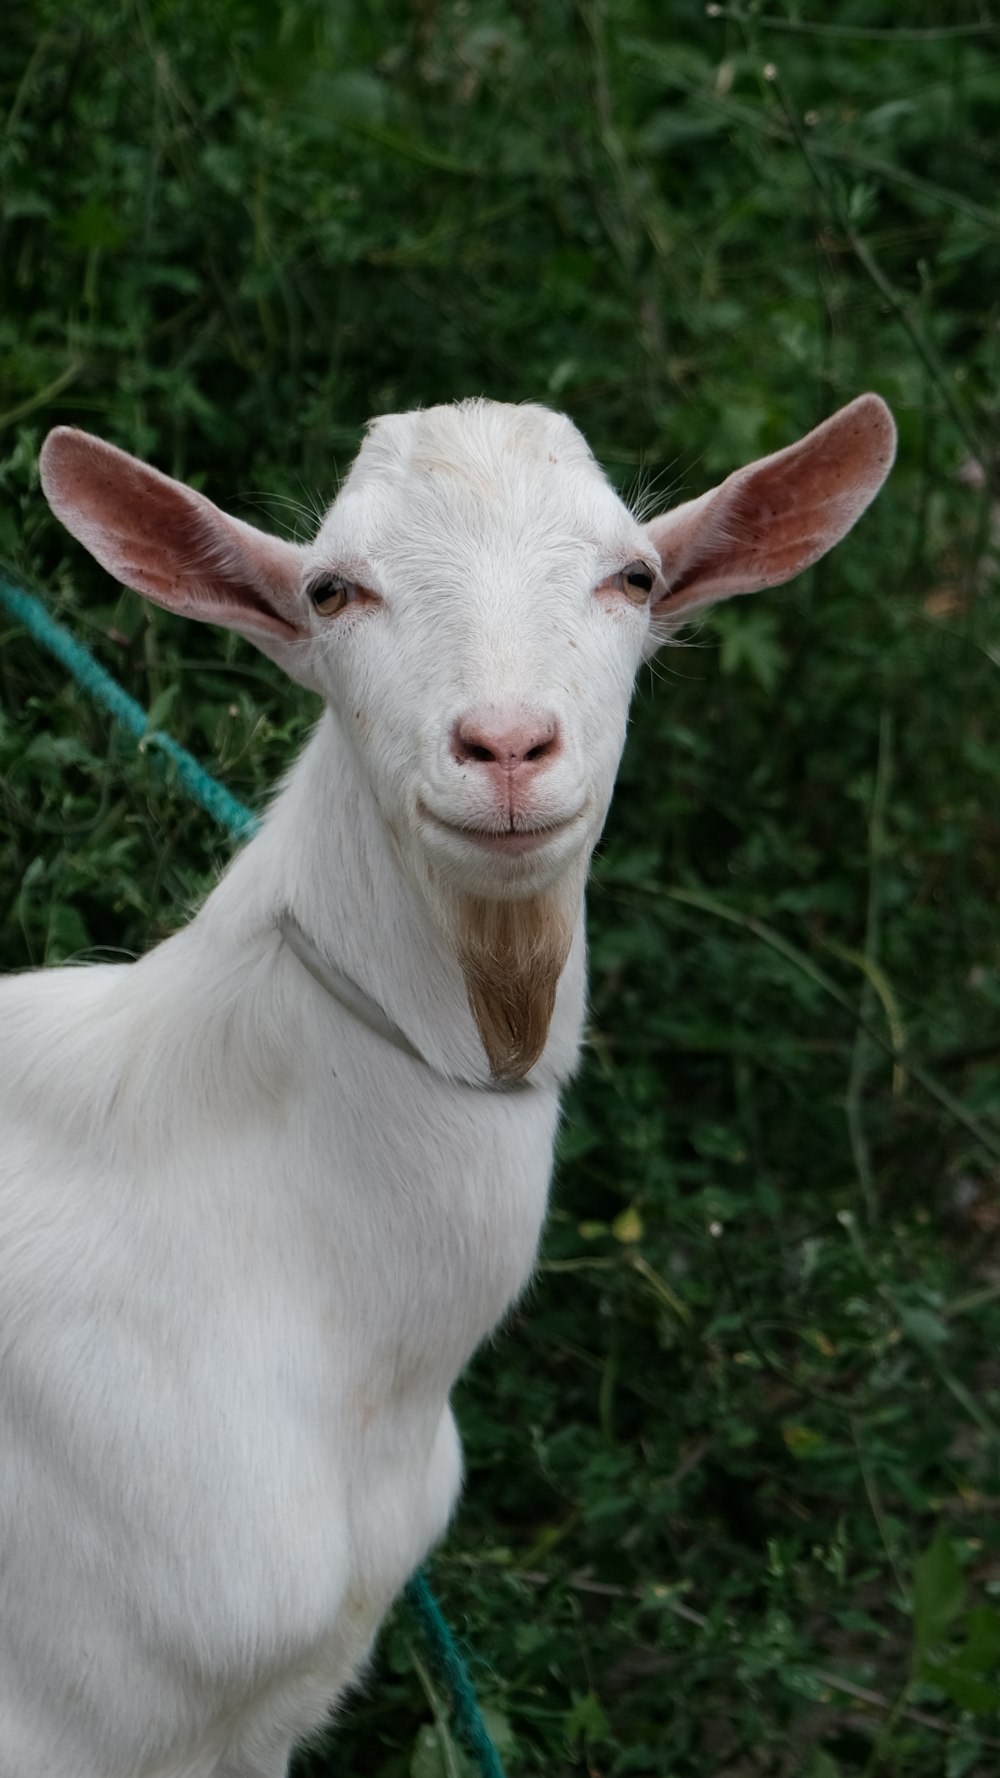 white goat on green grass during daytime